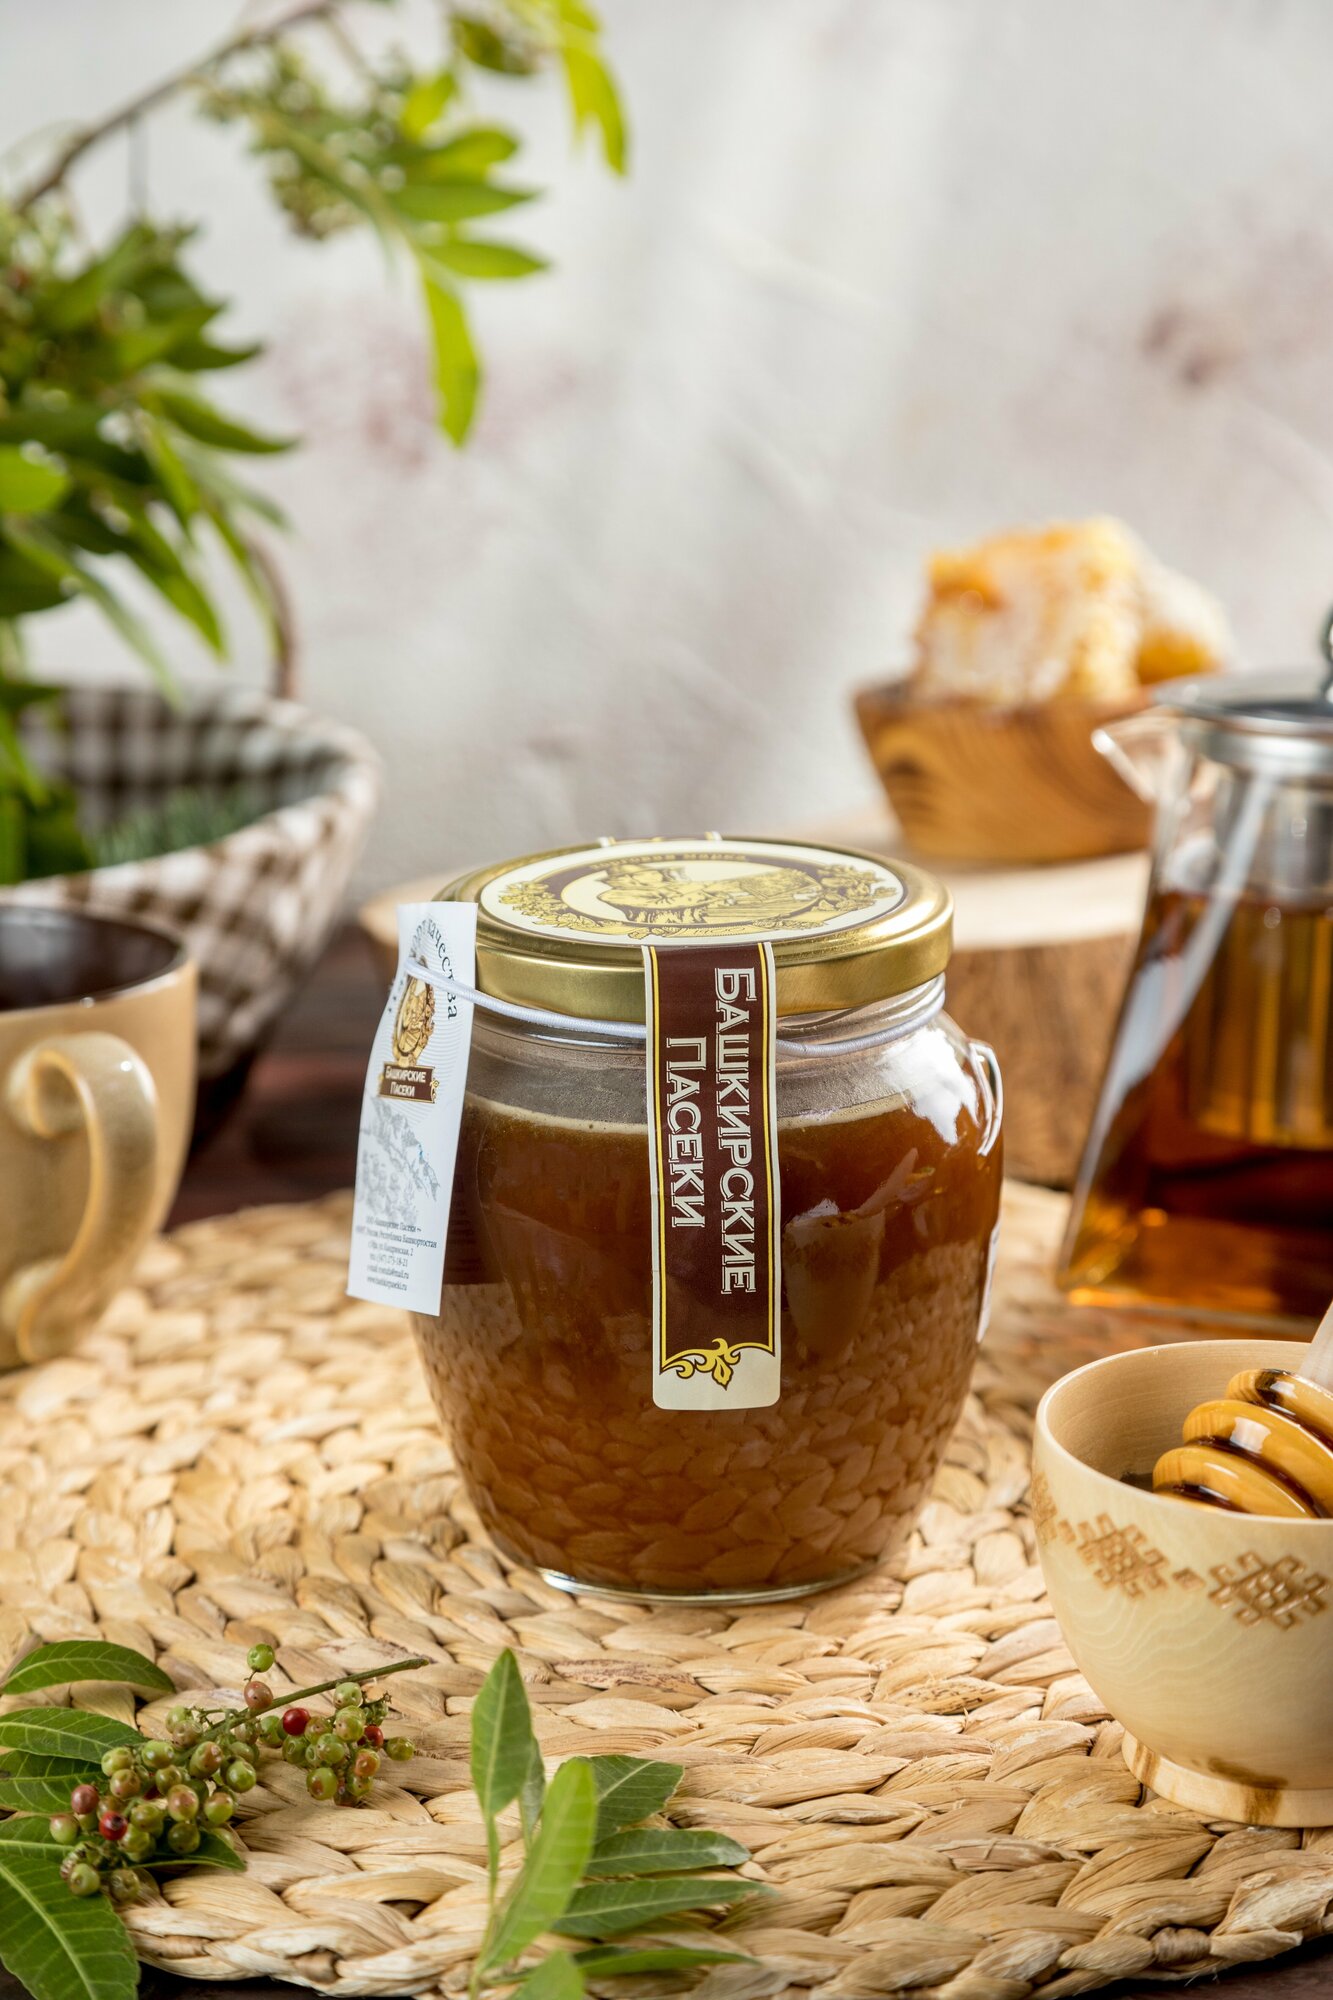 Амфора гречишный мёд, 650 гр, мед натуральный башкирский